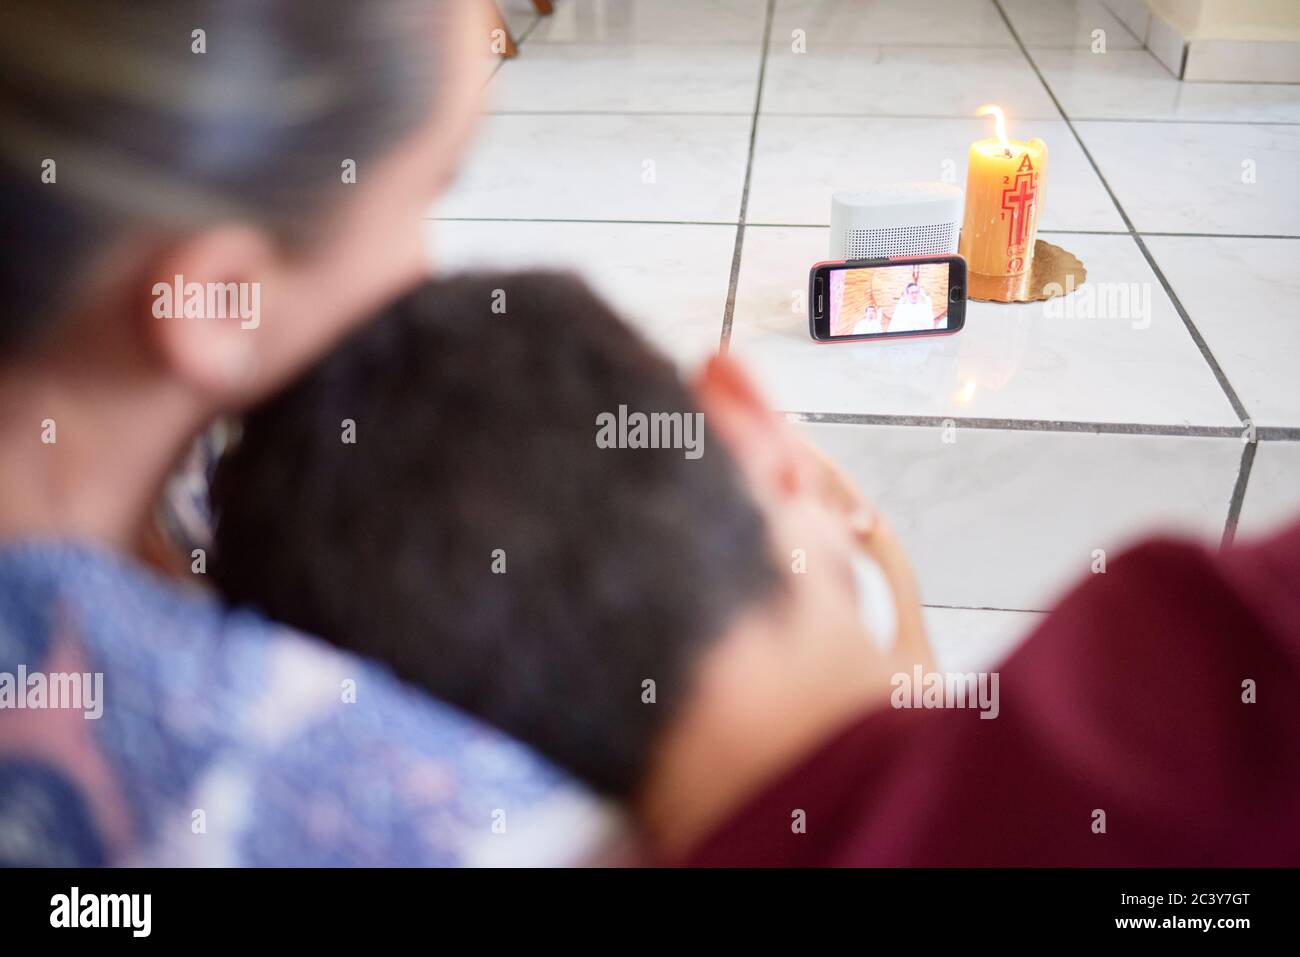 Family attending mass on cellphone Stock Photo